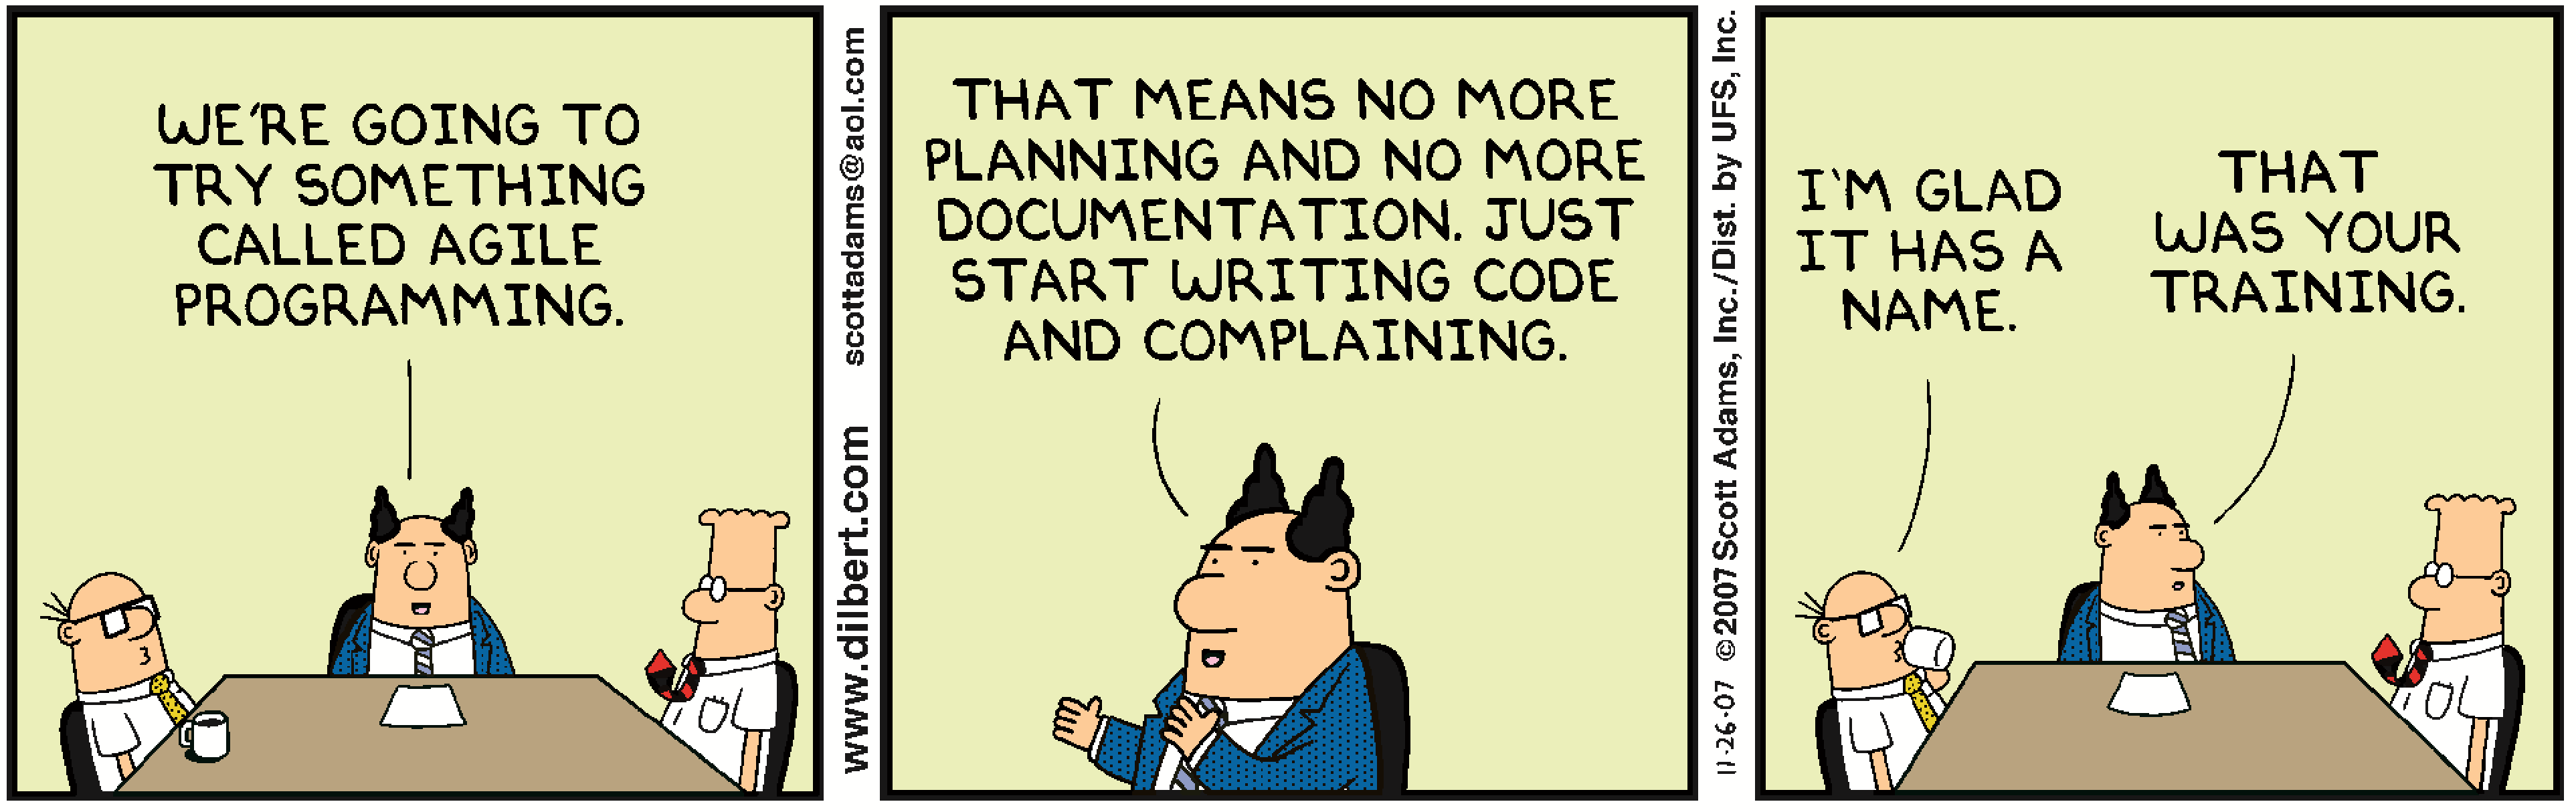 Dilbert Training Agile Programming